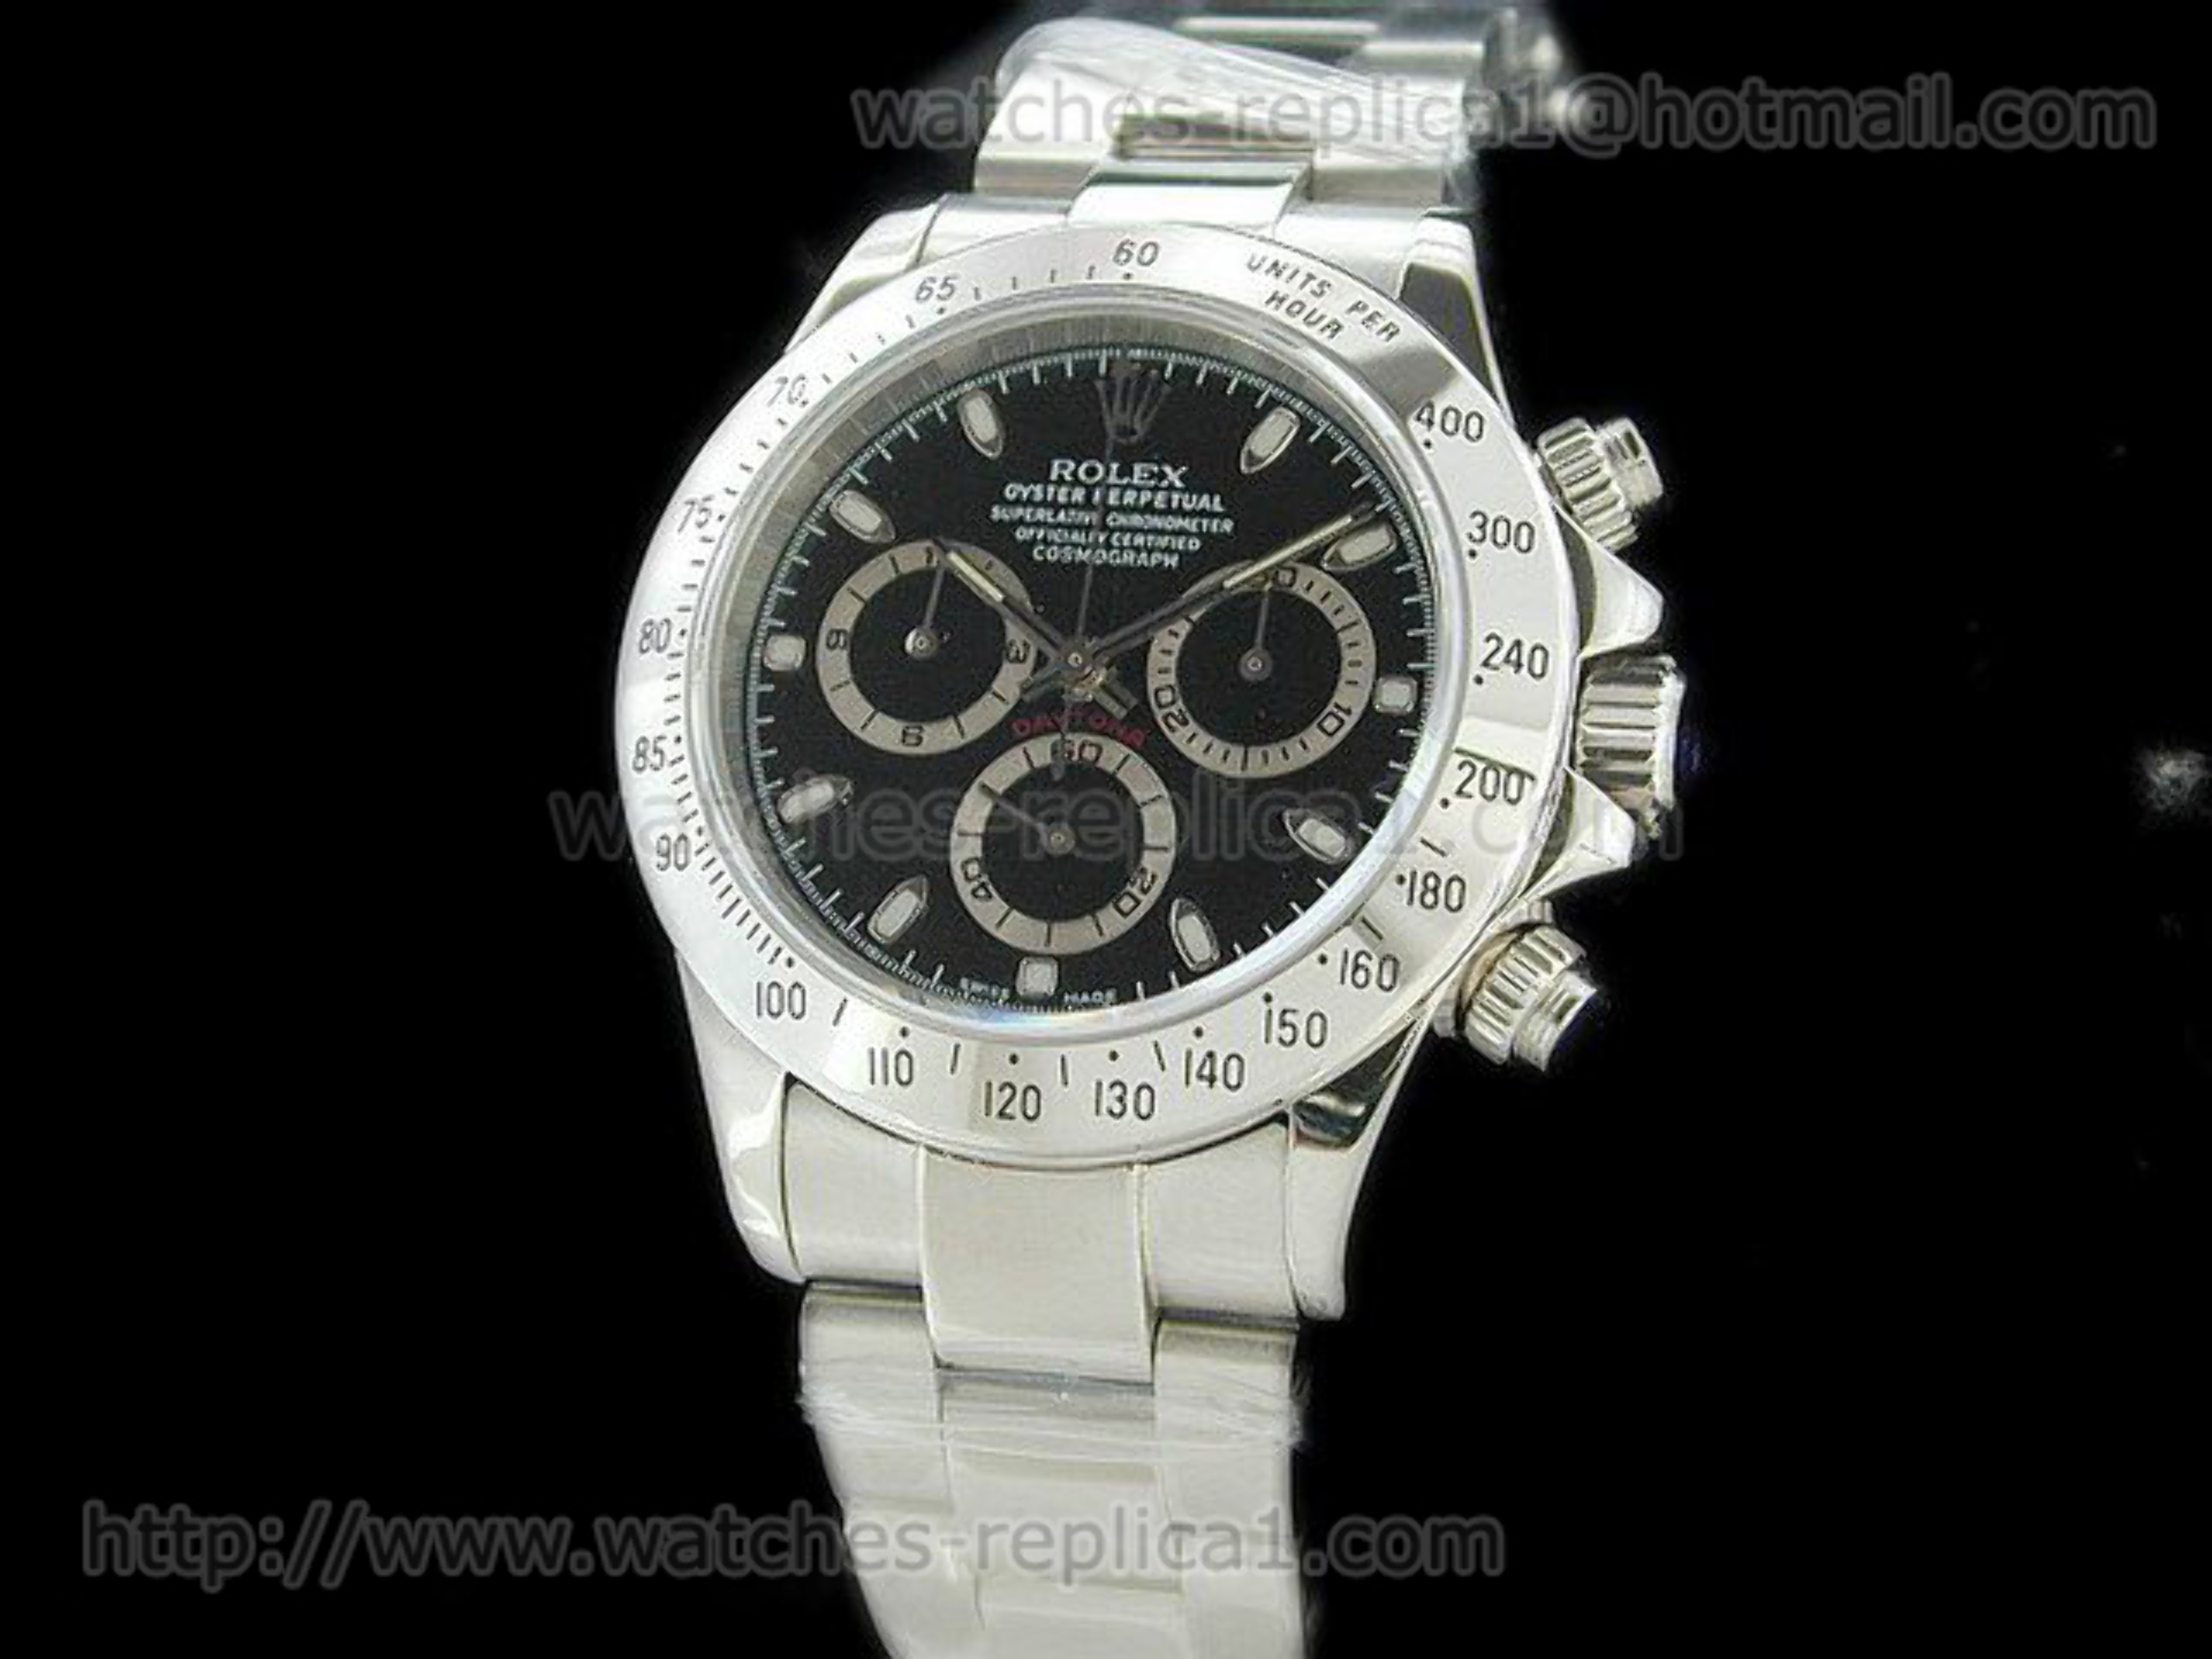 Replica watches:Rolex replica watches,Cartier replica watches,Omega